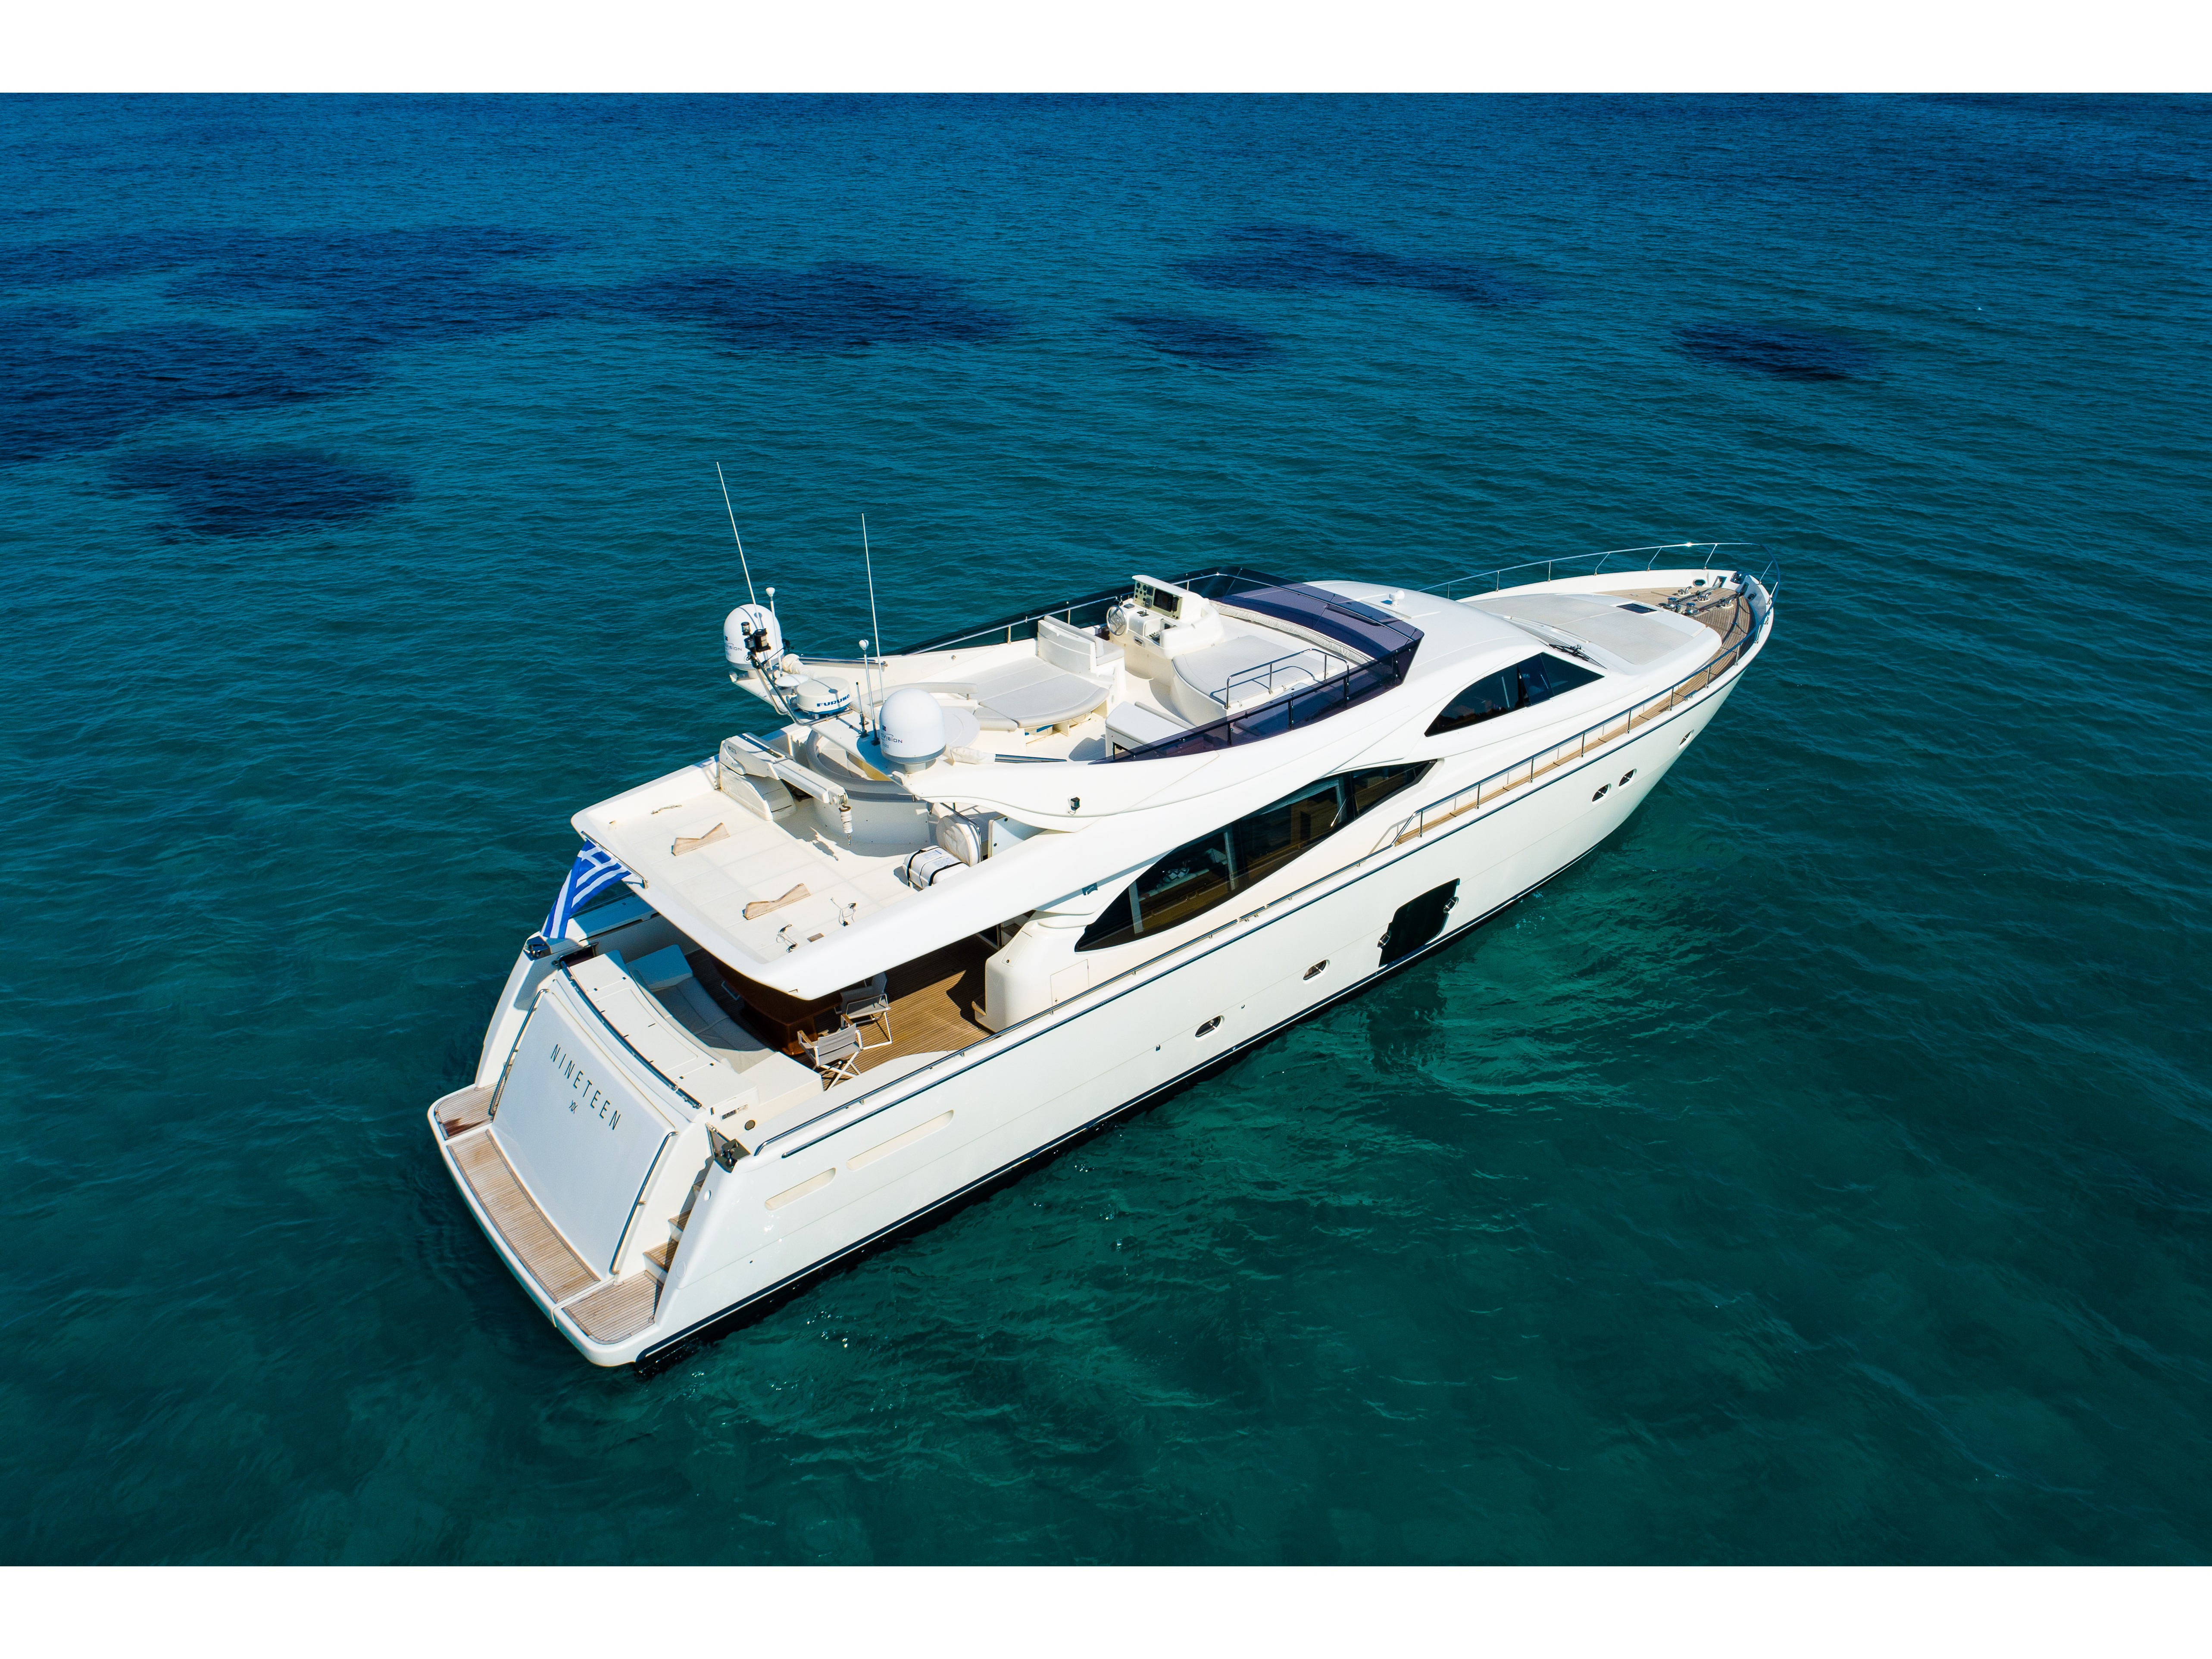 Ferretti 780 - Motor Boat Charter Greece & Boat hire in Greece Athens and Saronic Gulf Athens Hellinikon Agios Kosmas Marina 1